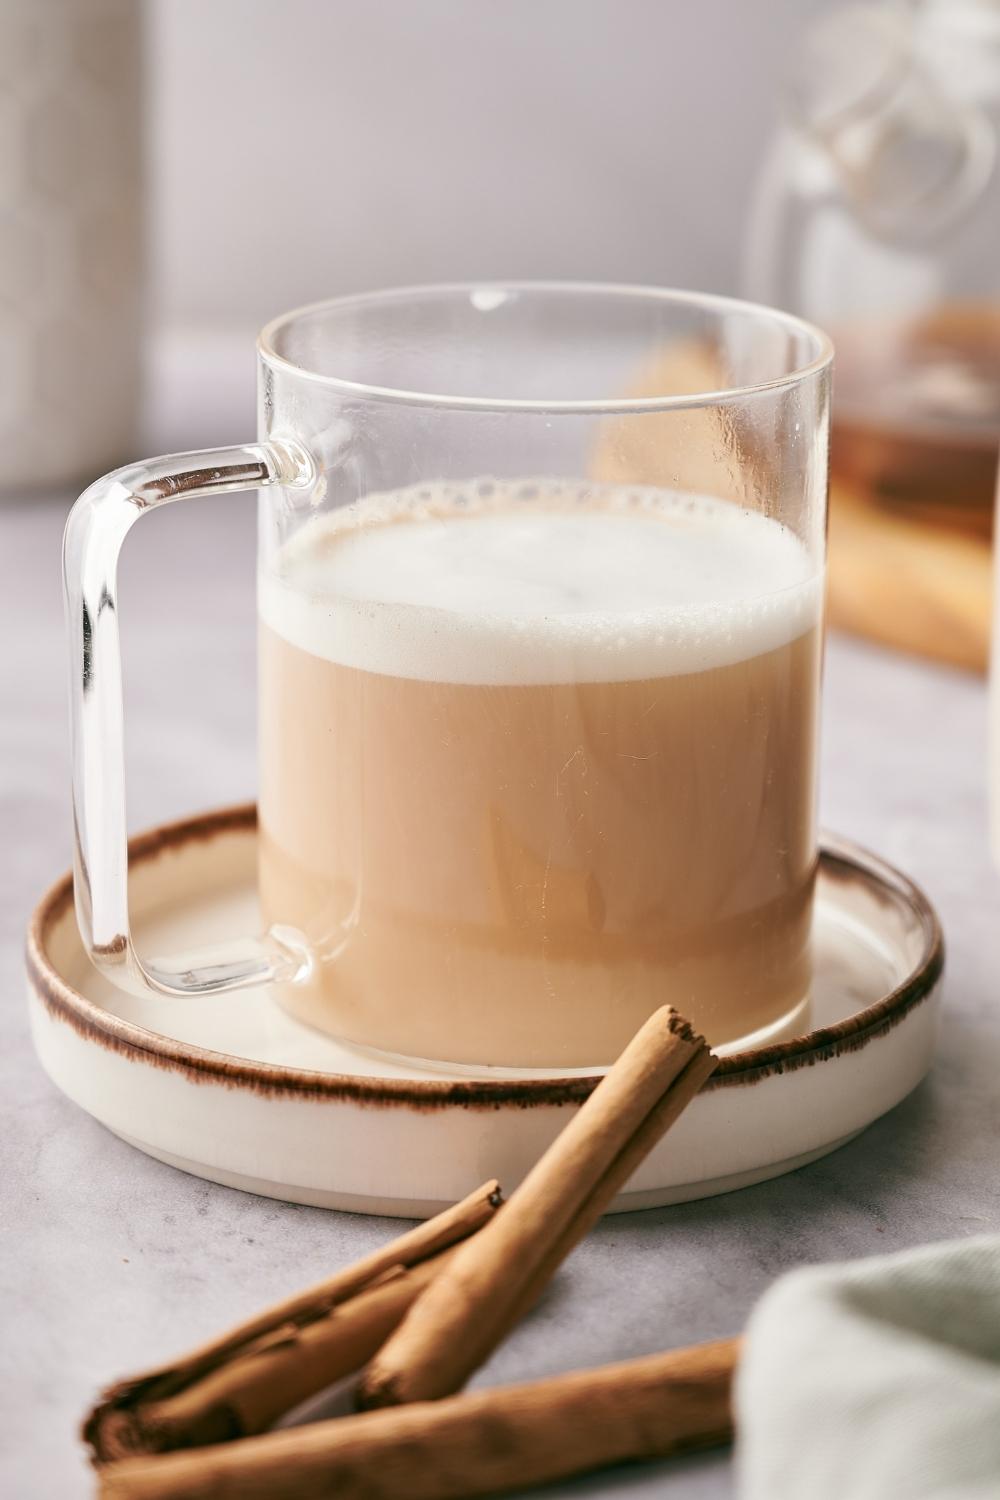 A clear mug with chai tea latte in it sitting on a ceramic saucer. Cinnamon sticks garnish the dish.